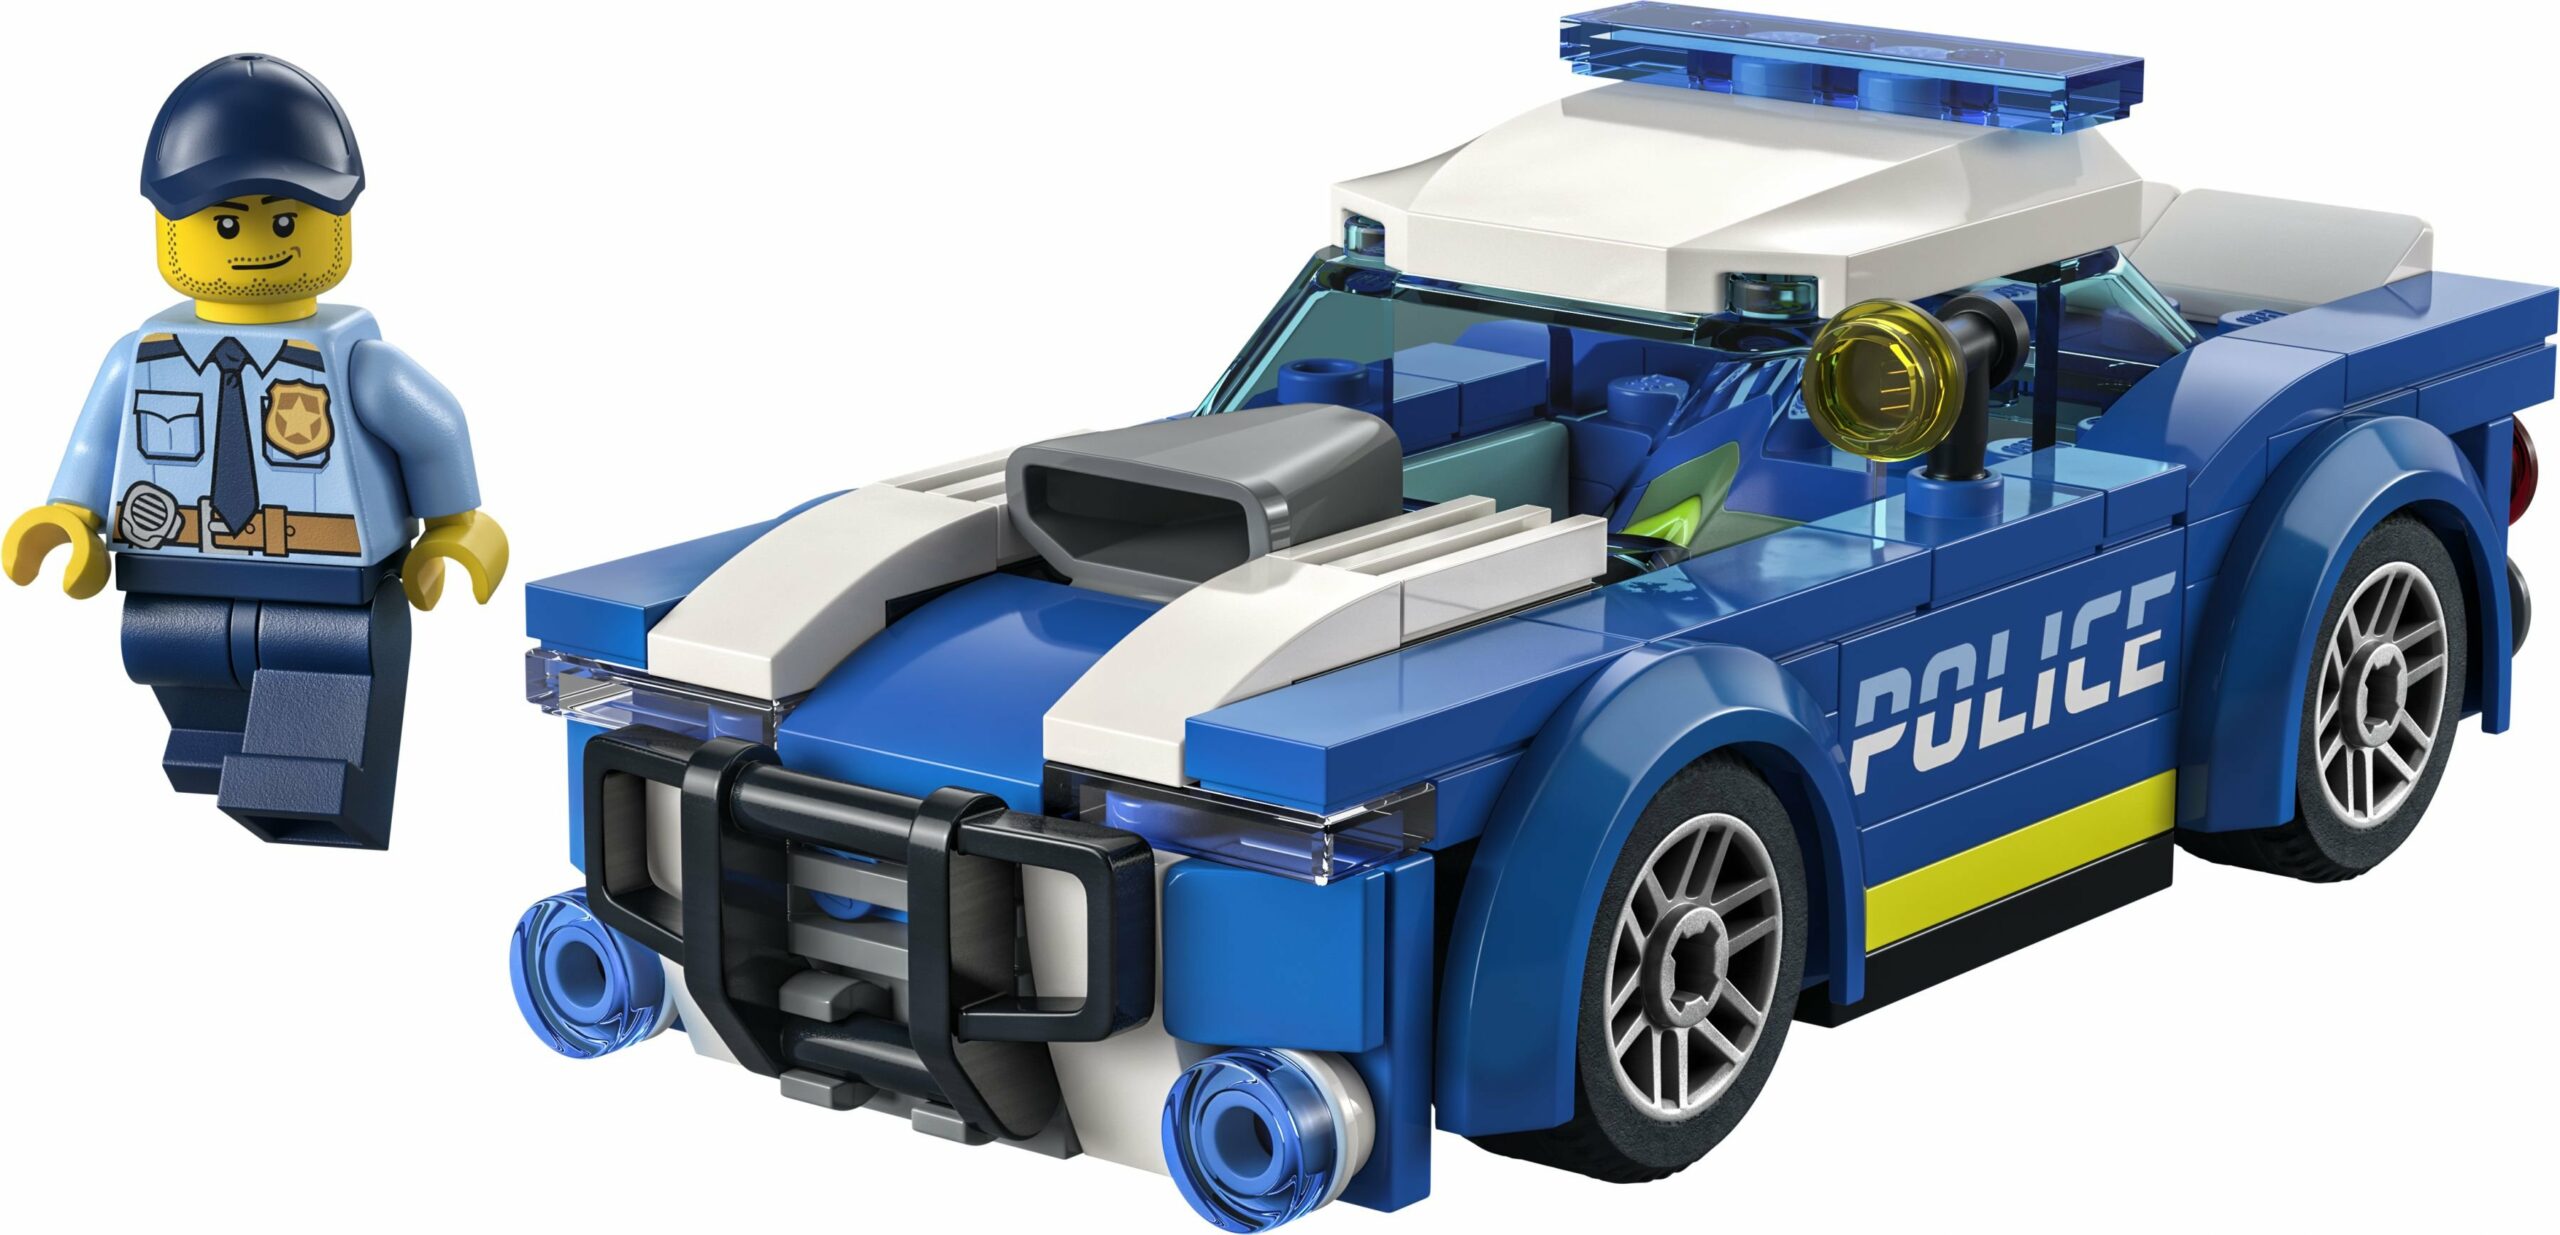 LEGO City - Polizeiauto